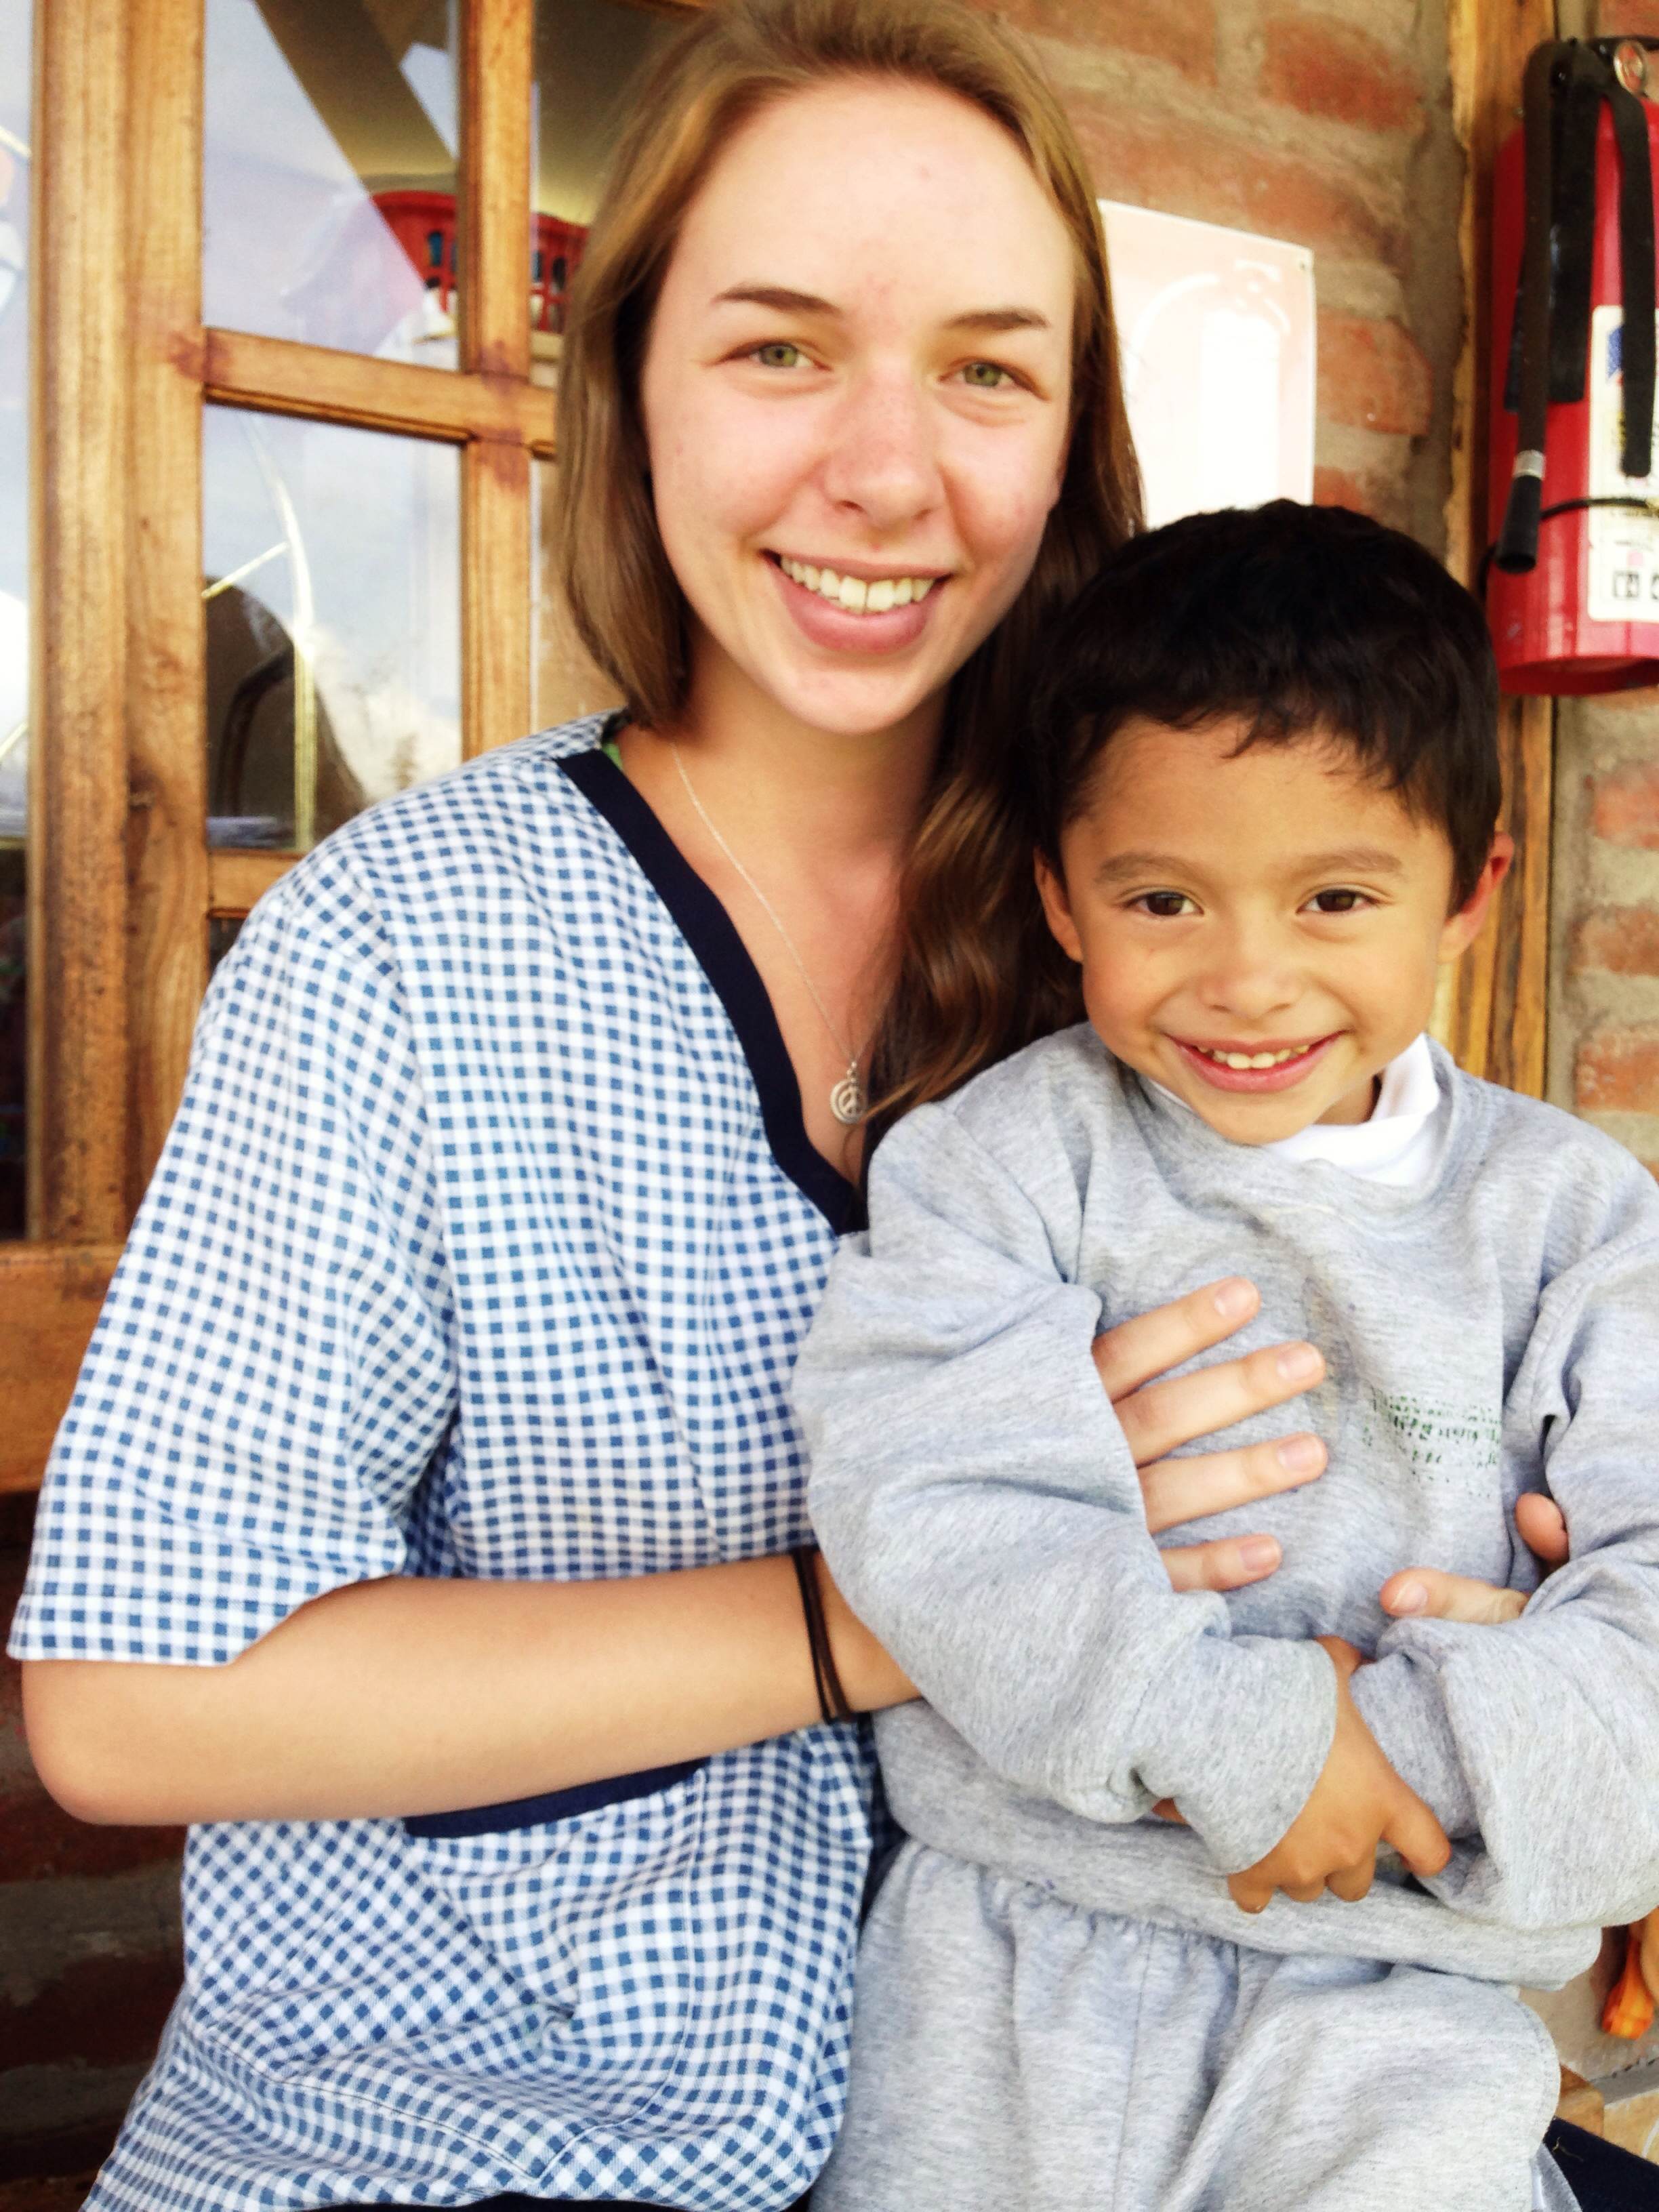 Revisiting Ecuador: From Volunteer to Lifelong Friend